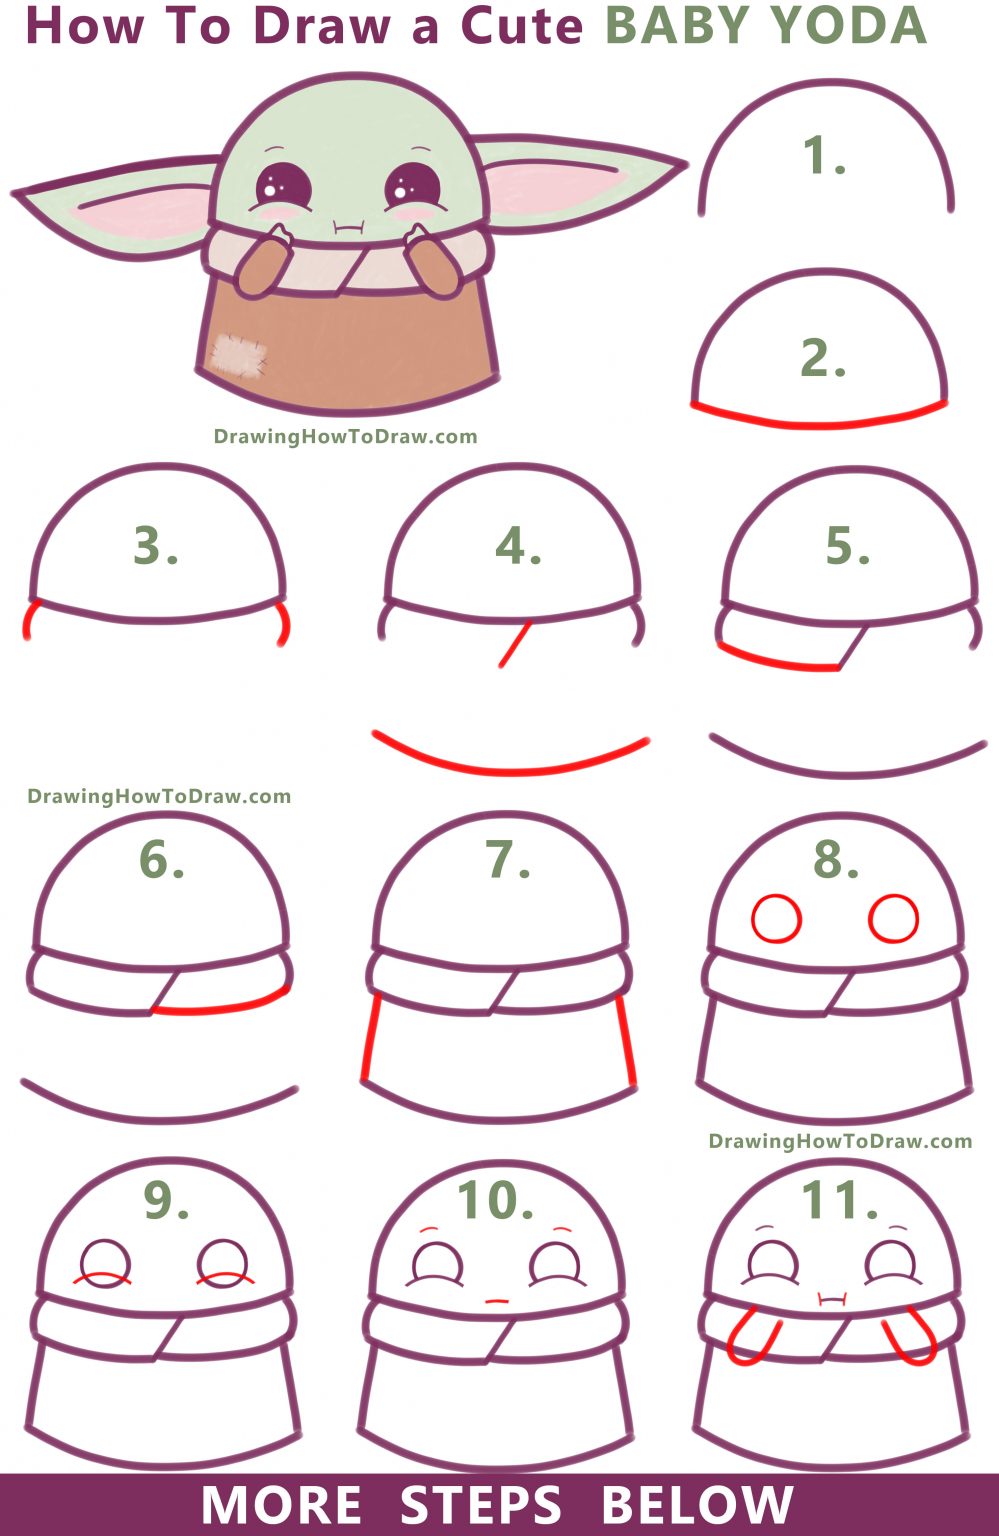 How to Draw a Cute Cartoon Baby Yoda (Kawaii / Chibi) Easy Step by Step ...